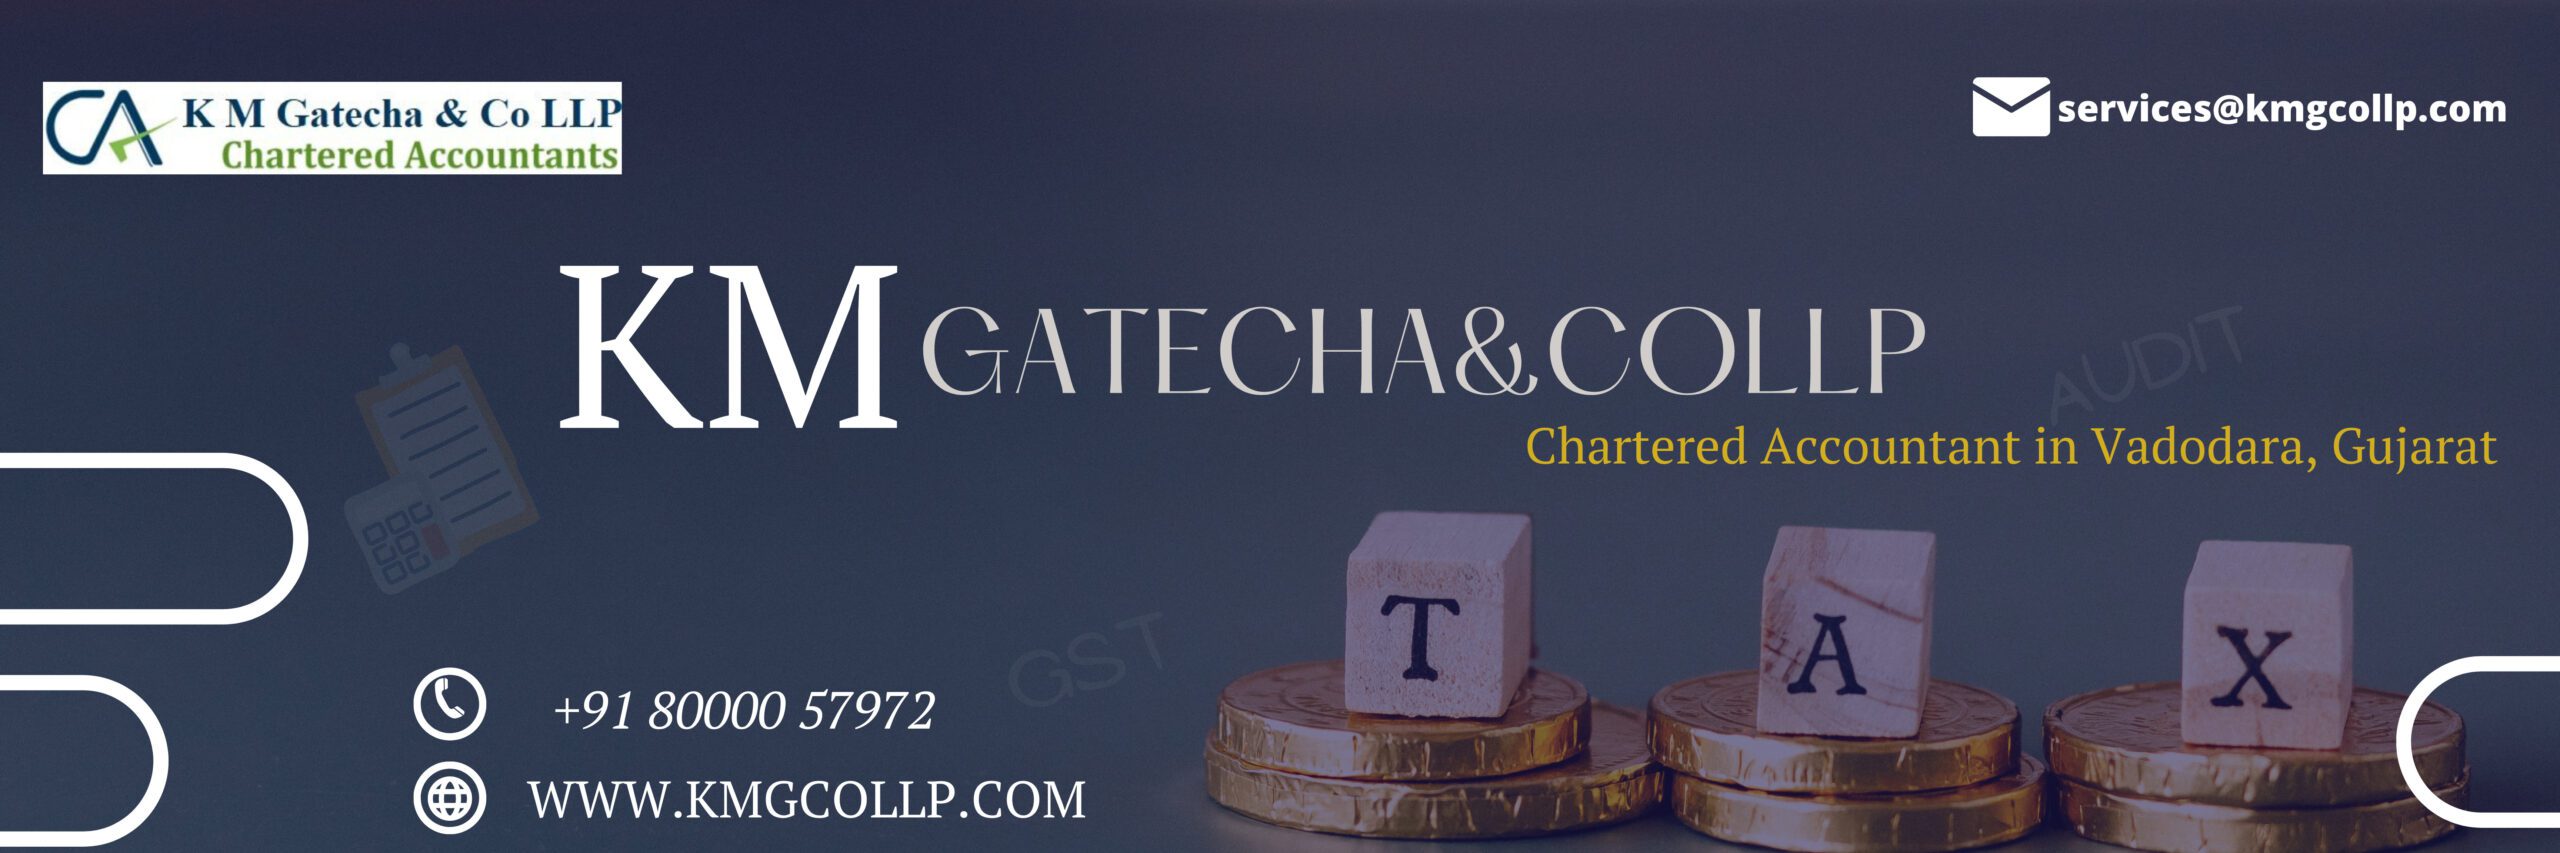 CA Chartered Accountant in Vadodara, Gujarat